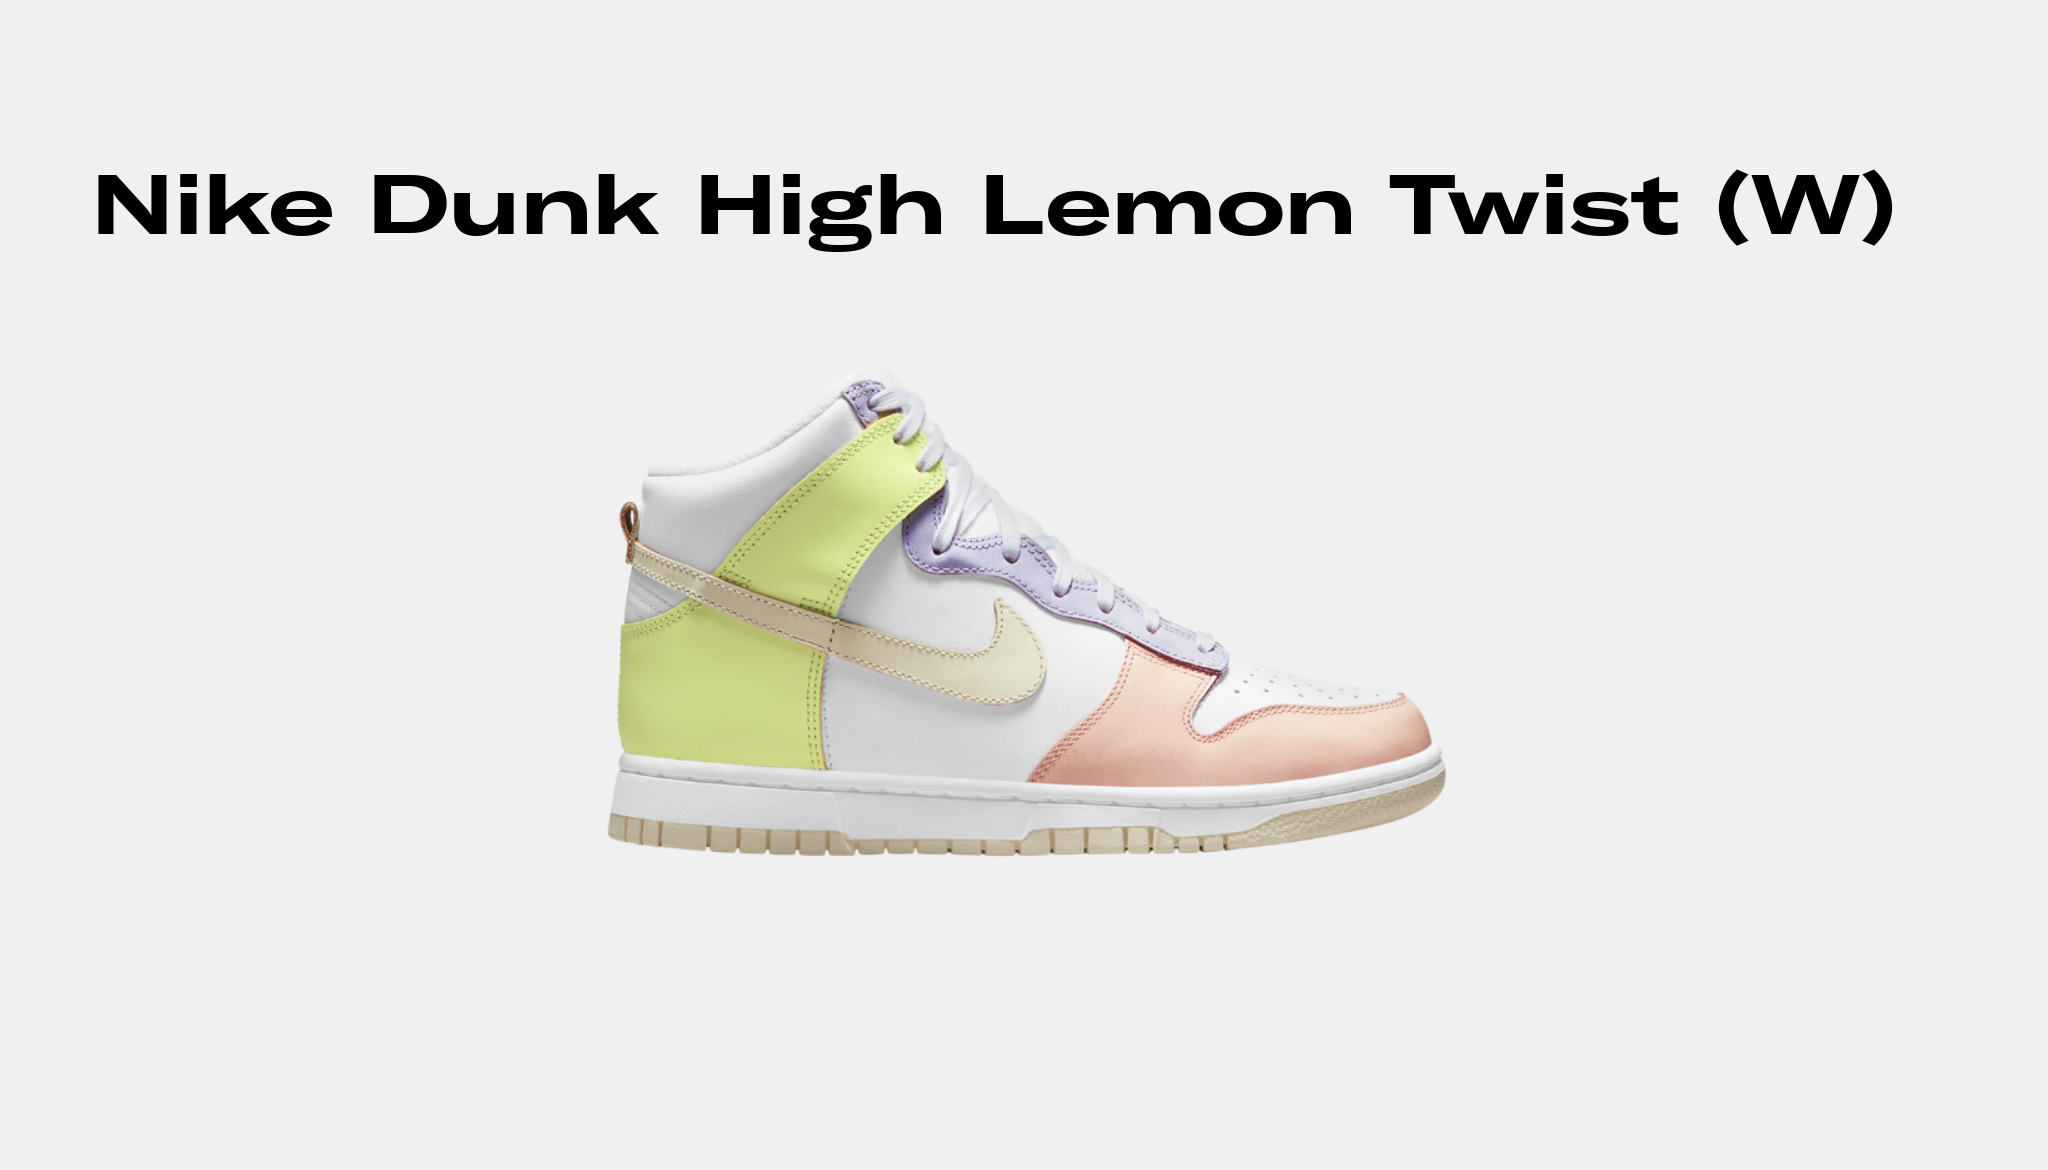 Nike Dunk High Lemon Twist (W), Raffles and Release Date | Sole 